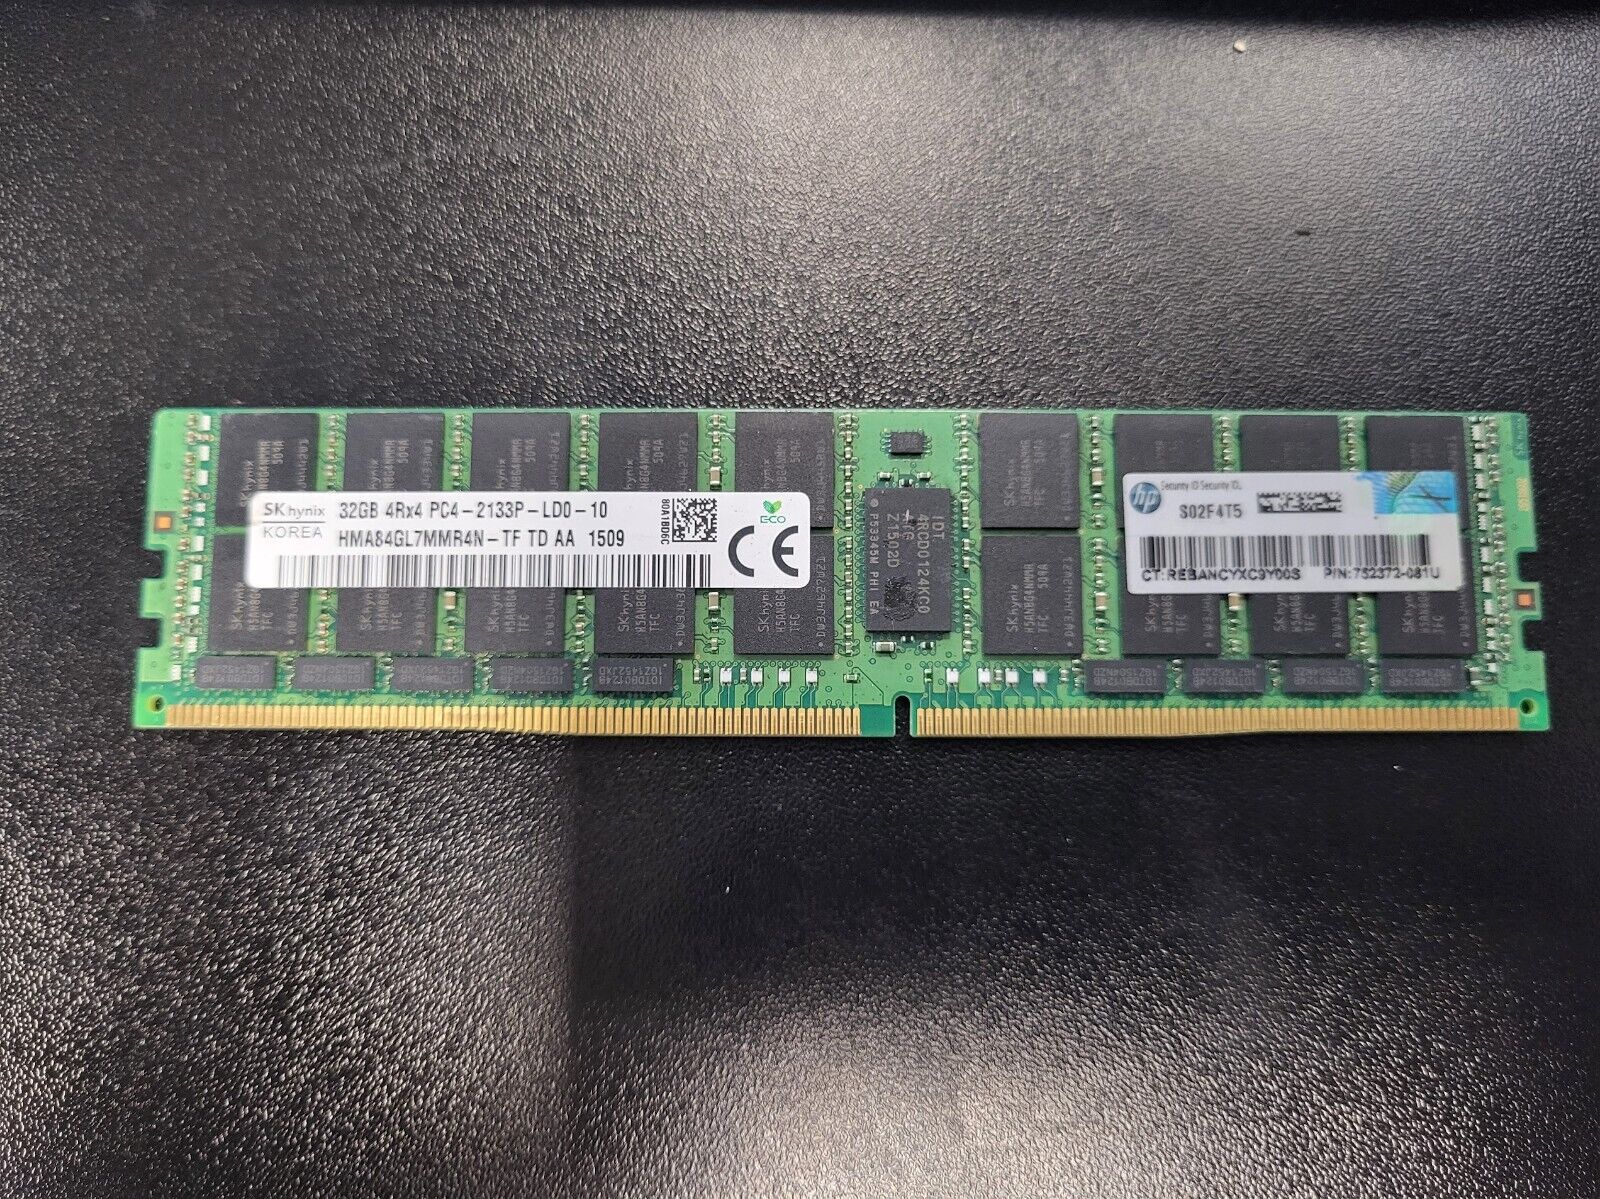 Hynix 32GB 4RX4 PC4-2133P-LD0-10 Registered ECC Server Memory RAM #73